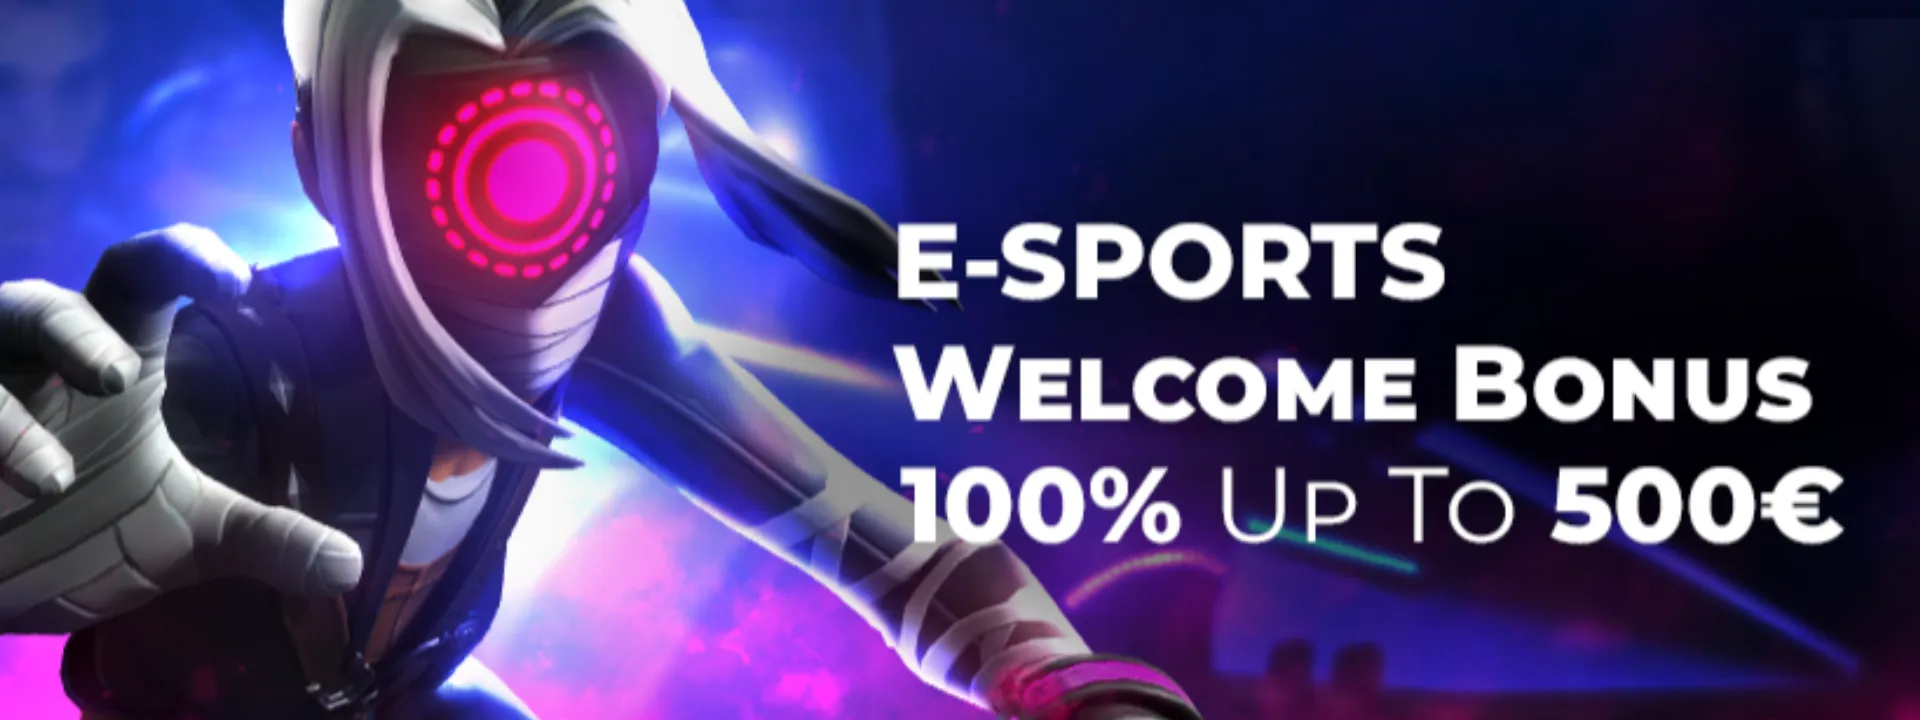 Welcome eSports Bonus